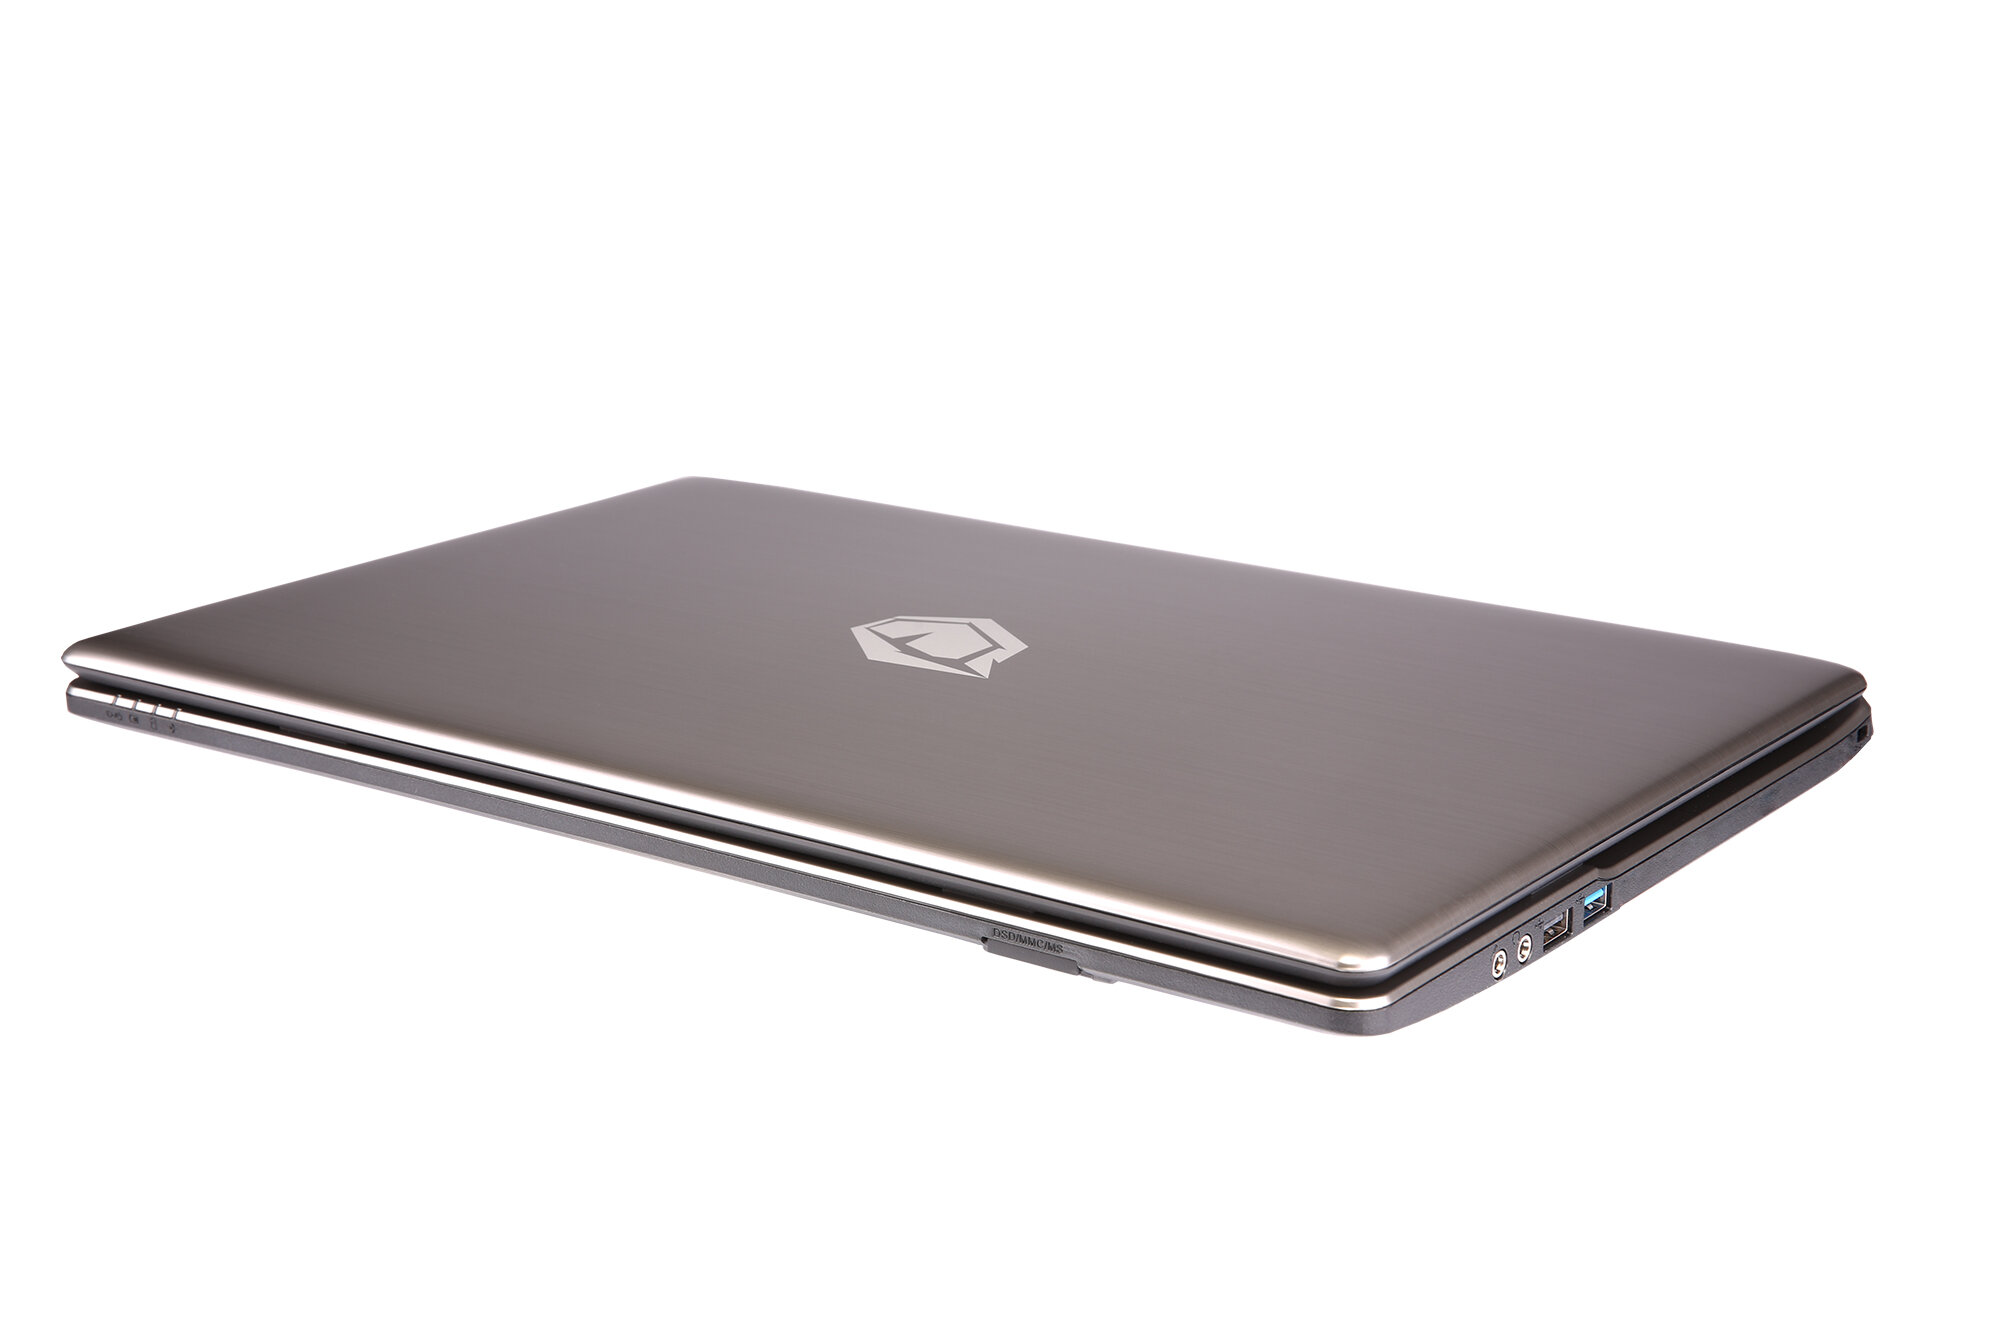 Abra A7 V5.4.1 17.3" Gaming Laptop 15106